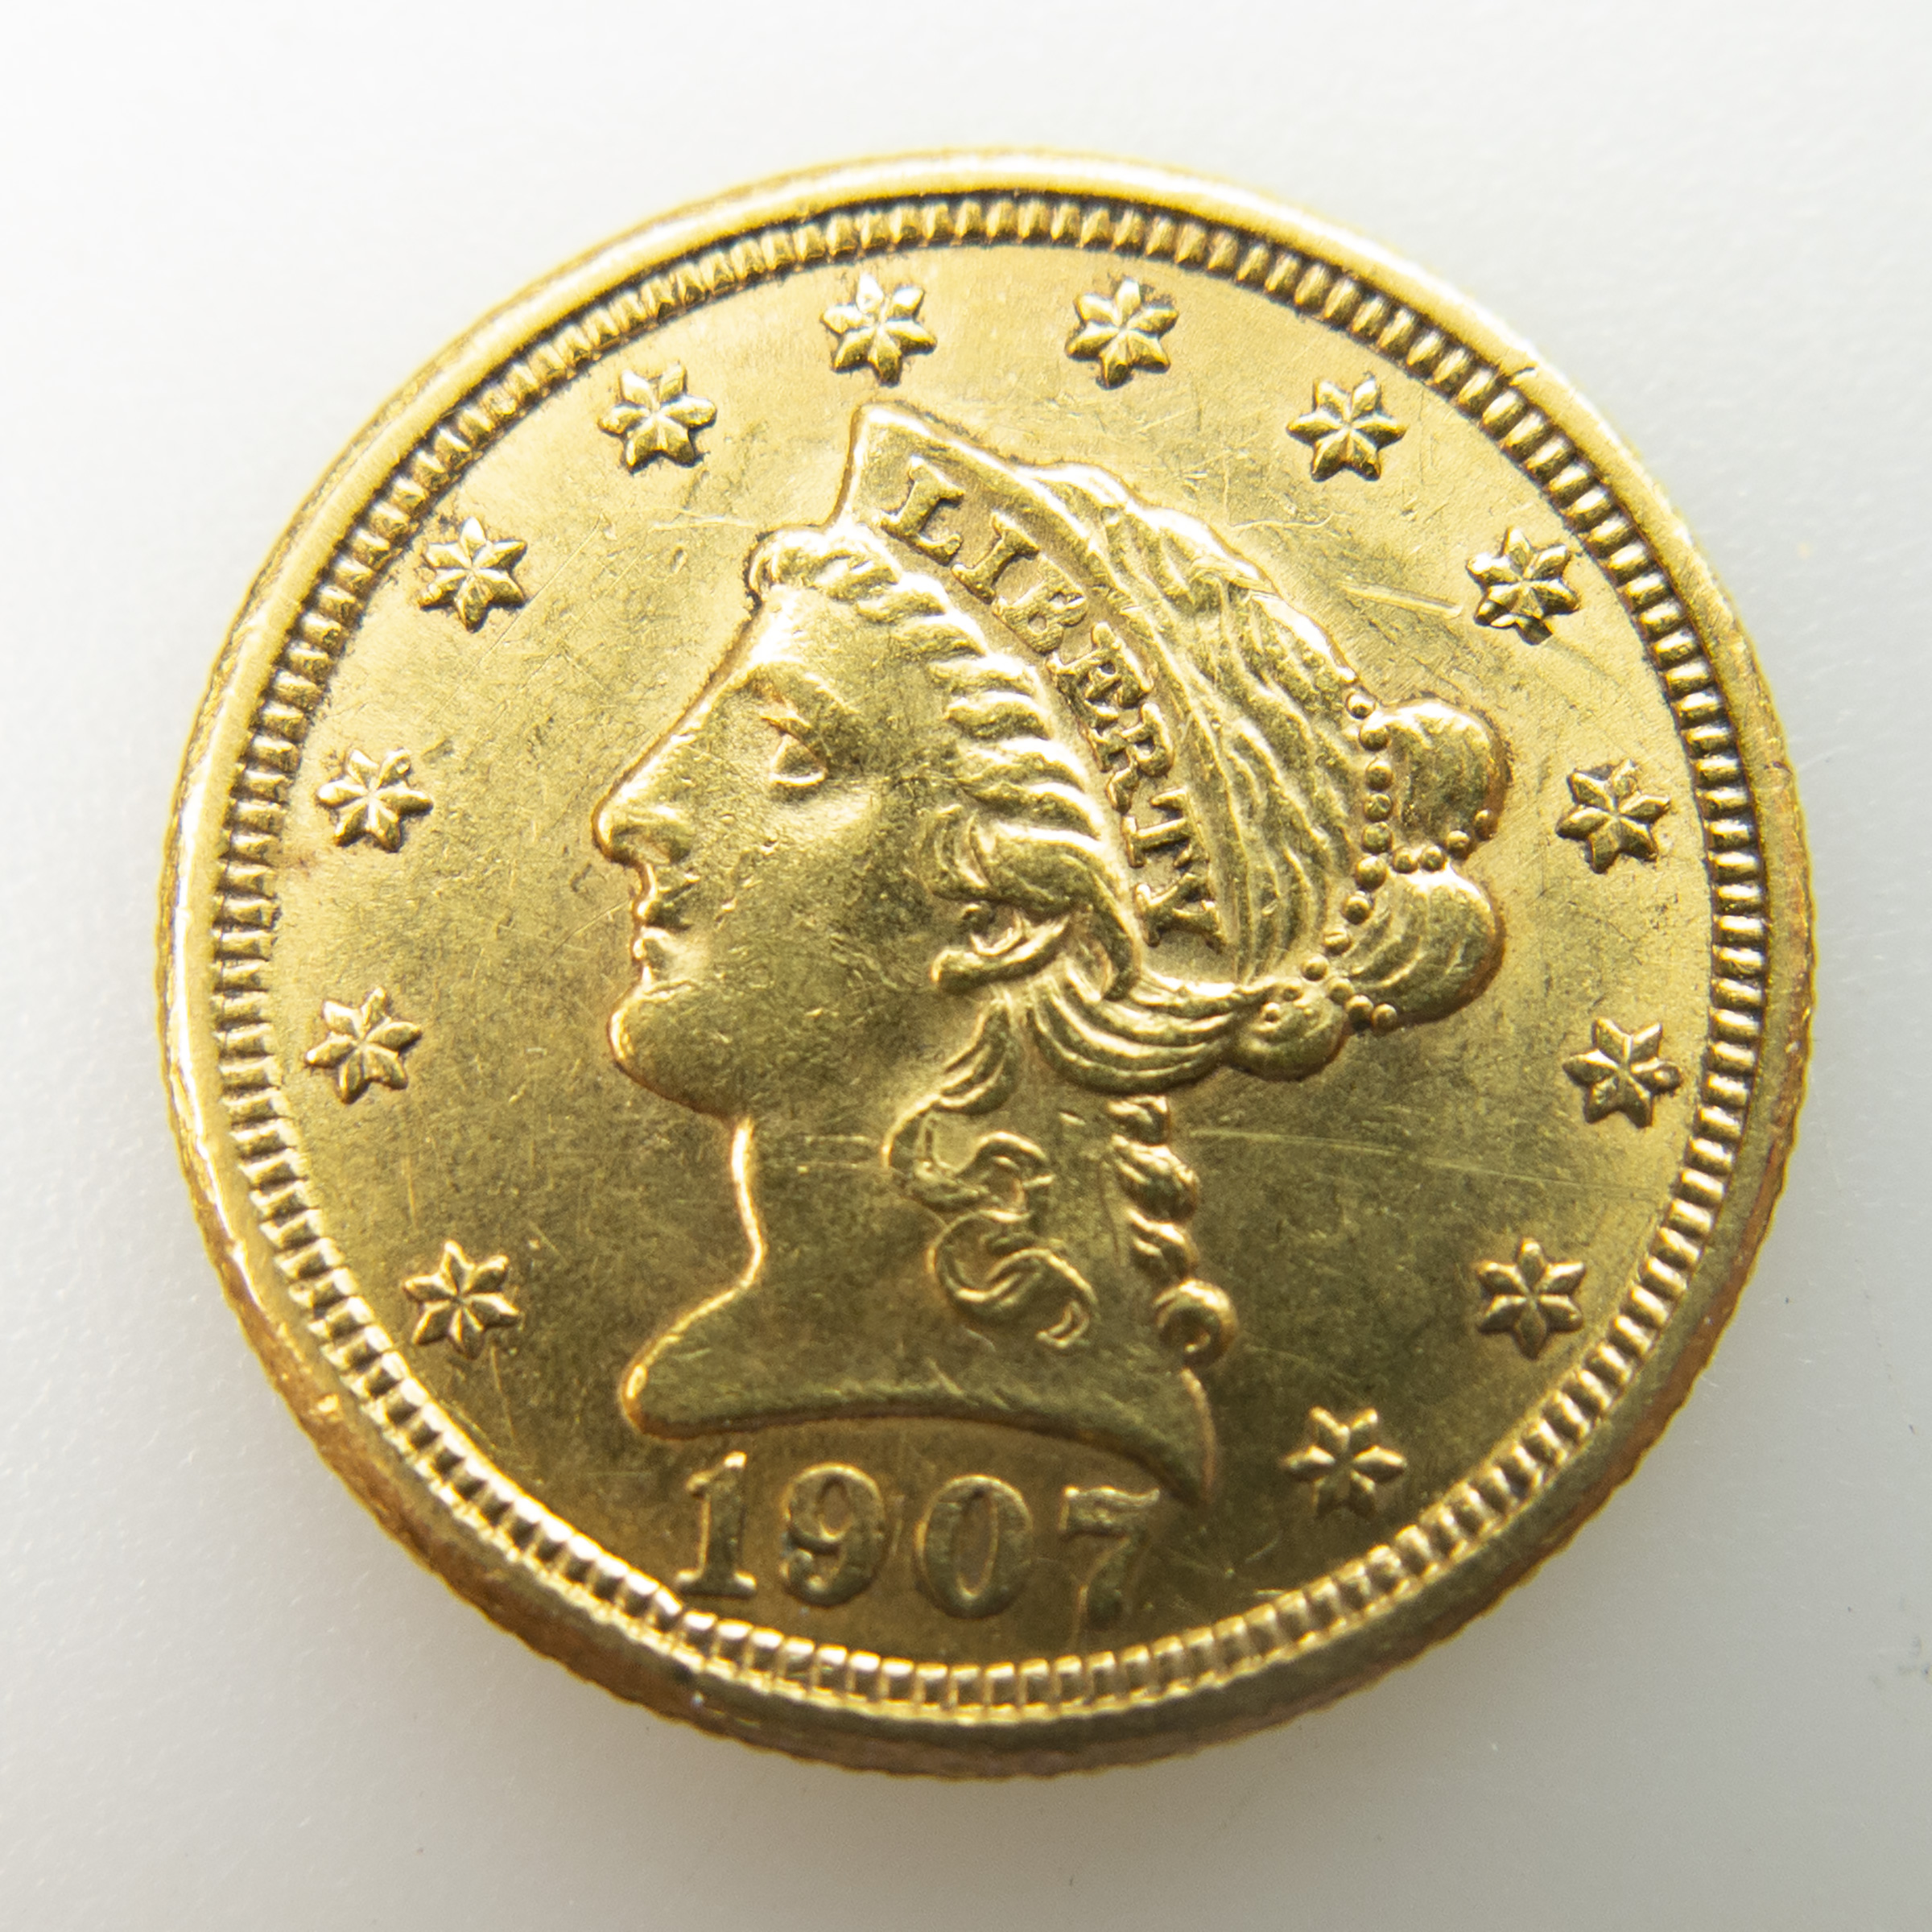 American 1907 $2 1/2 Quarter Eagle Gold Coin